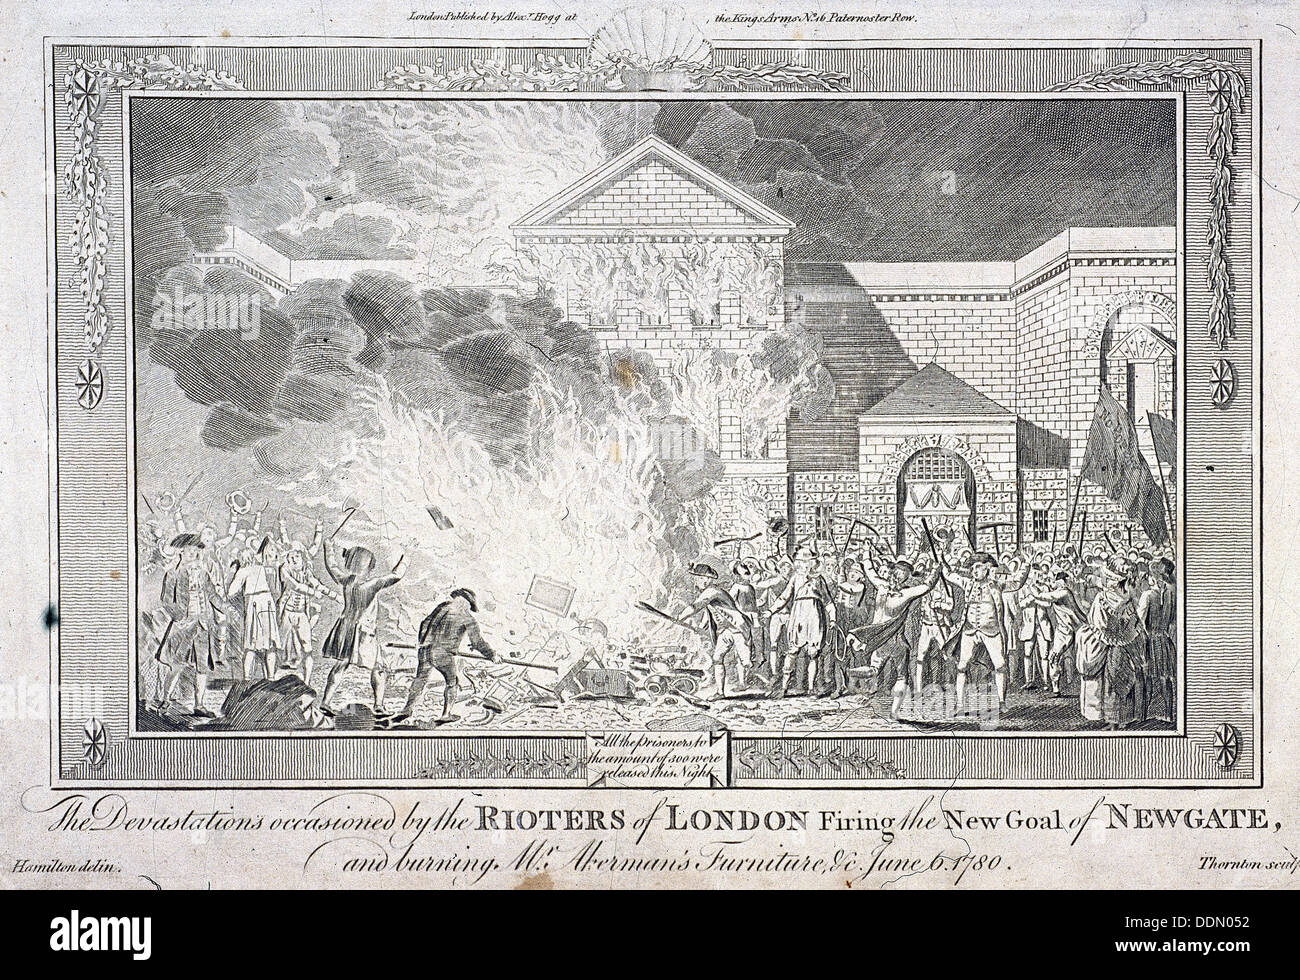 Gordon Riots, Newgate Prison, London, 1780. Artist: Thornton Stock Photo